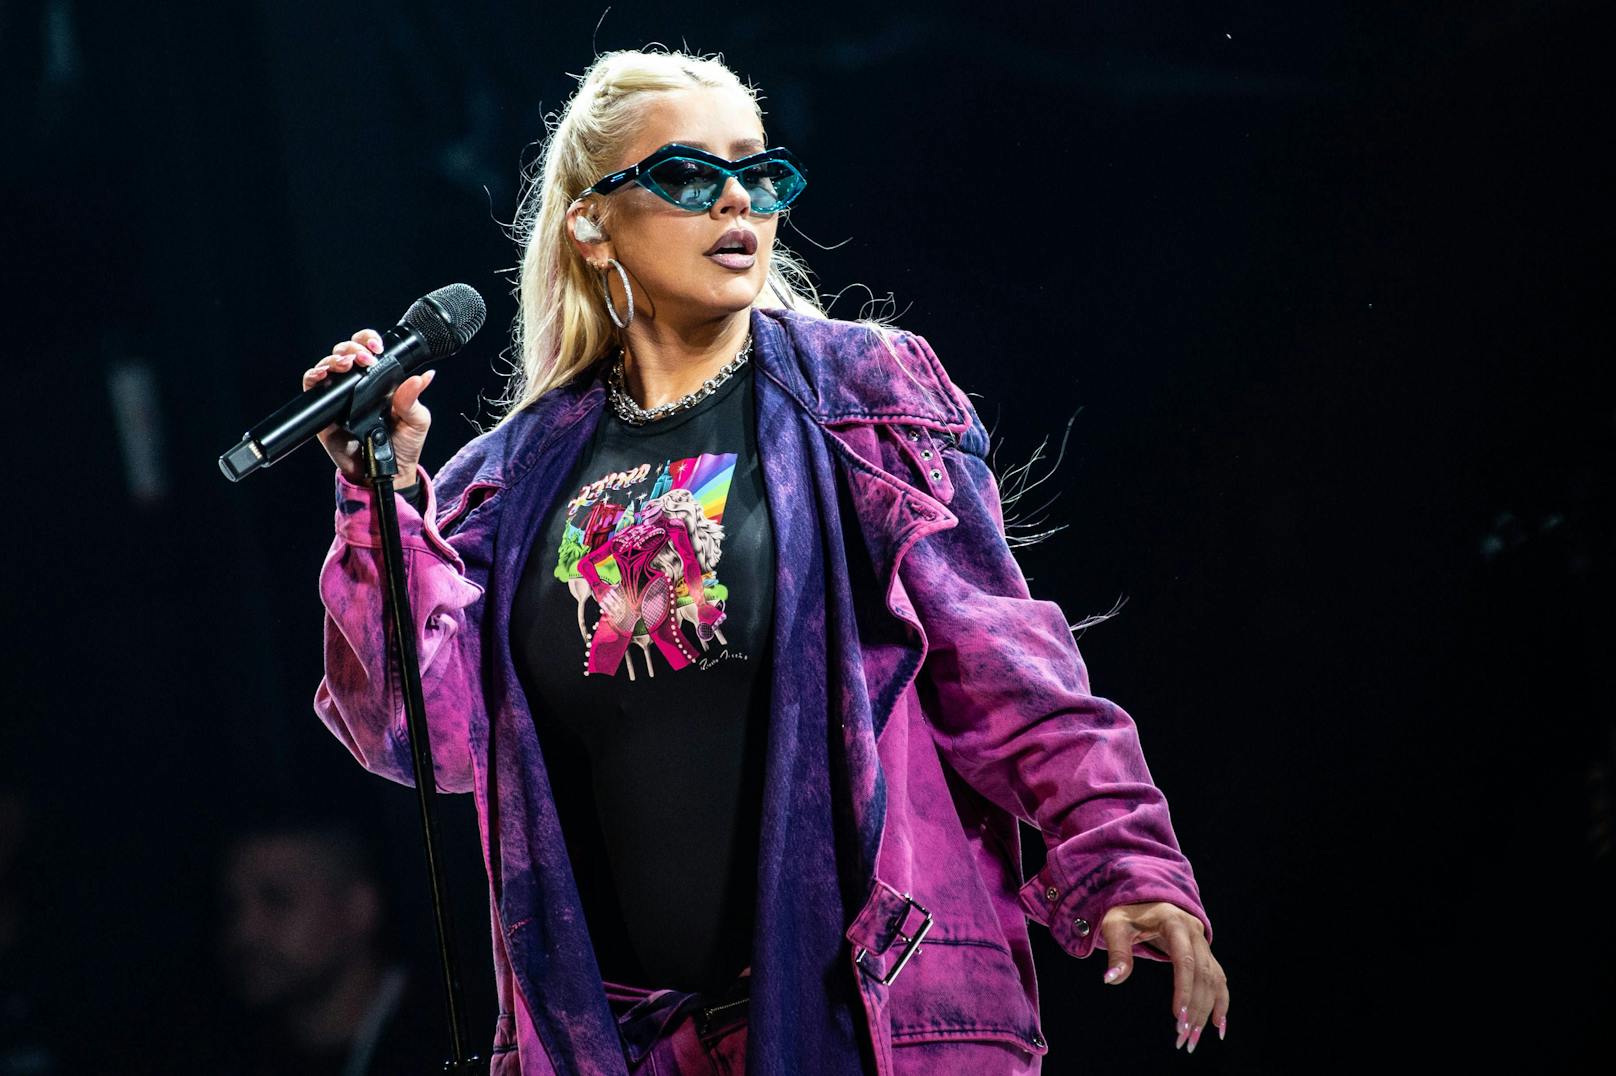 Popstar im Rollstuhl – Sorge um Christina Aguilera